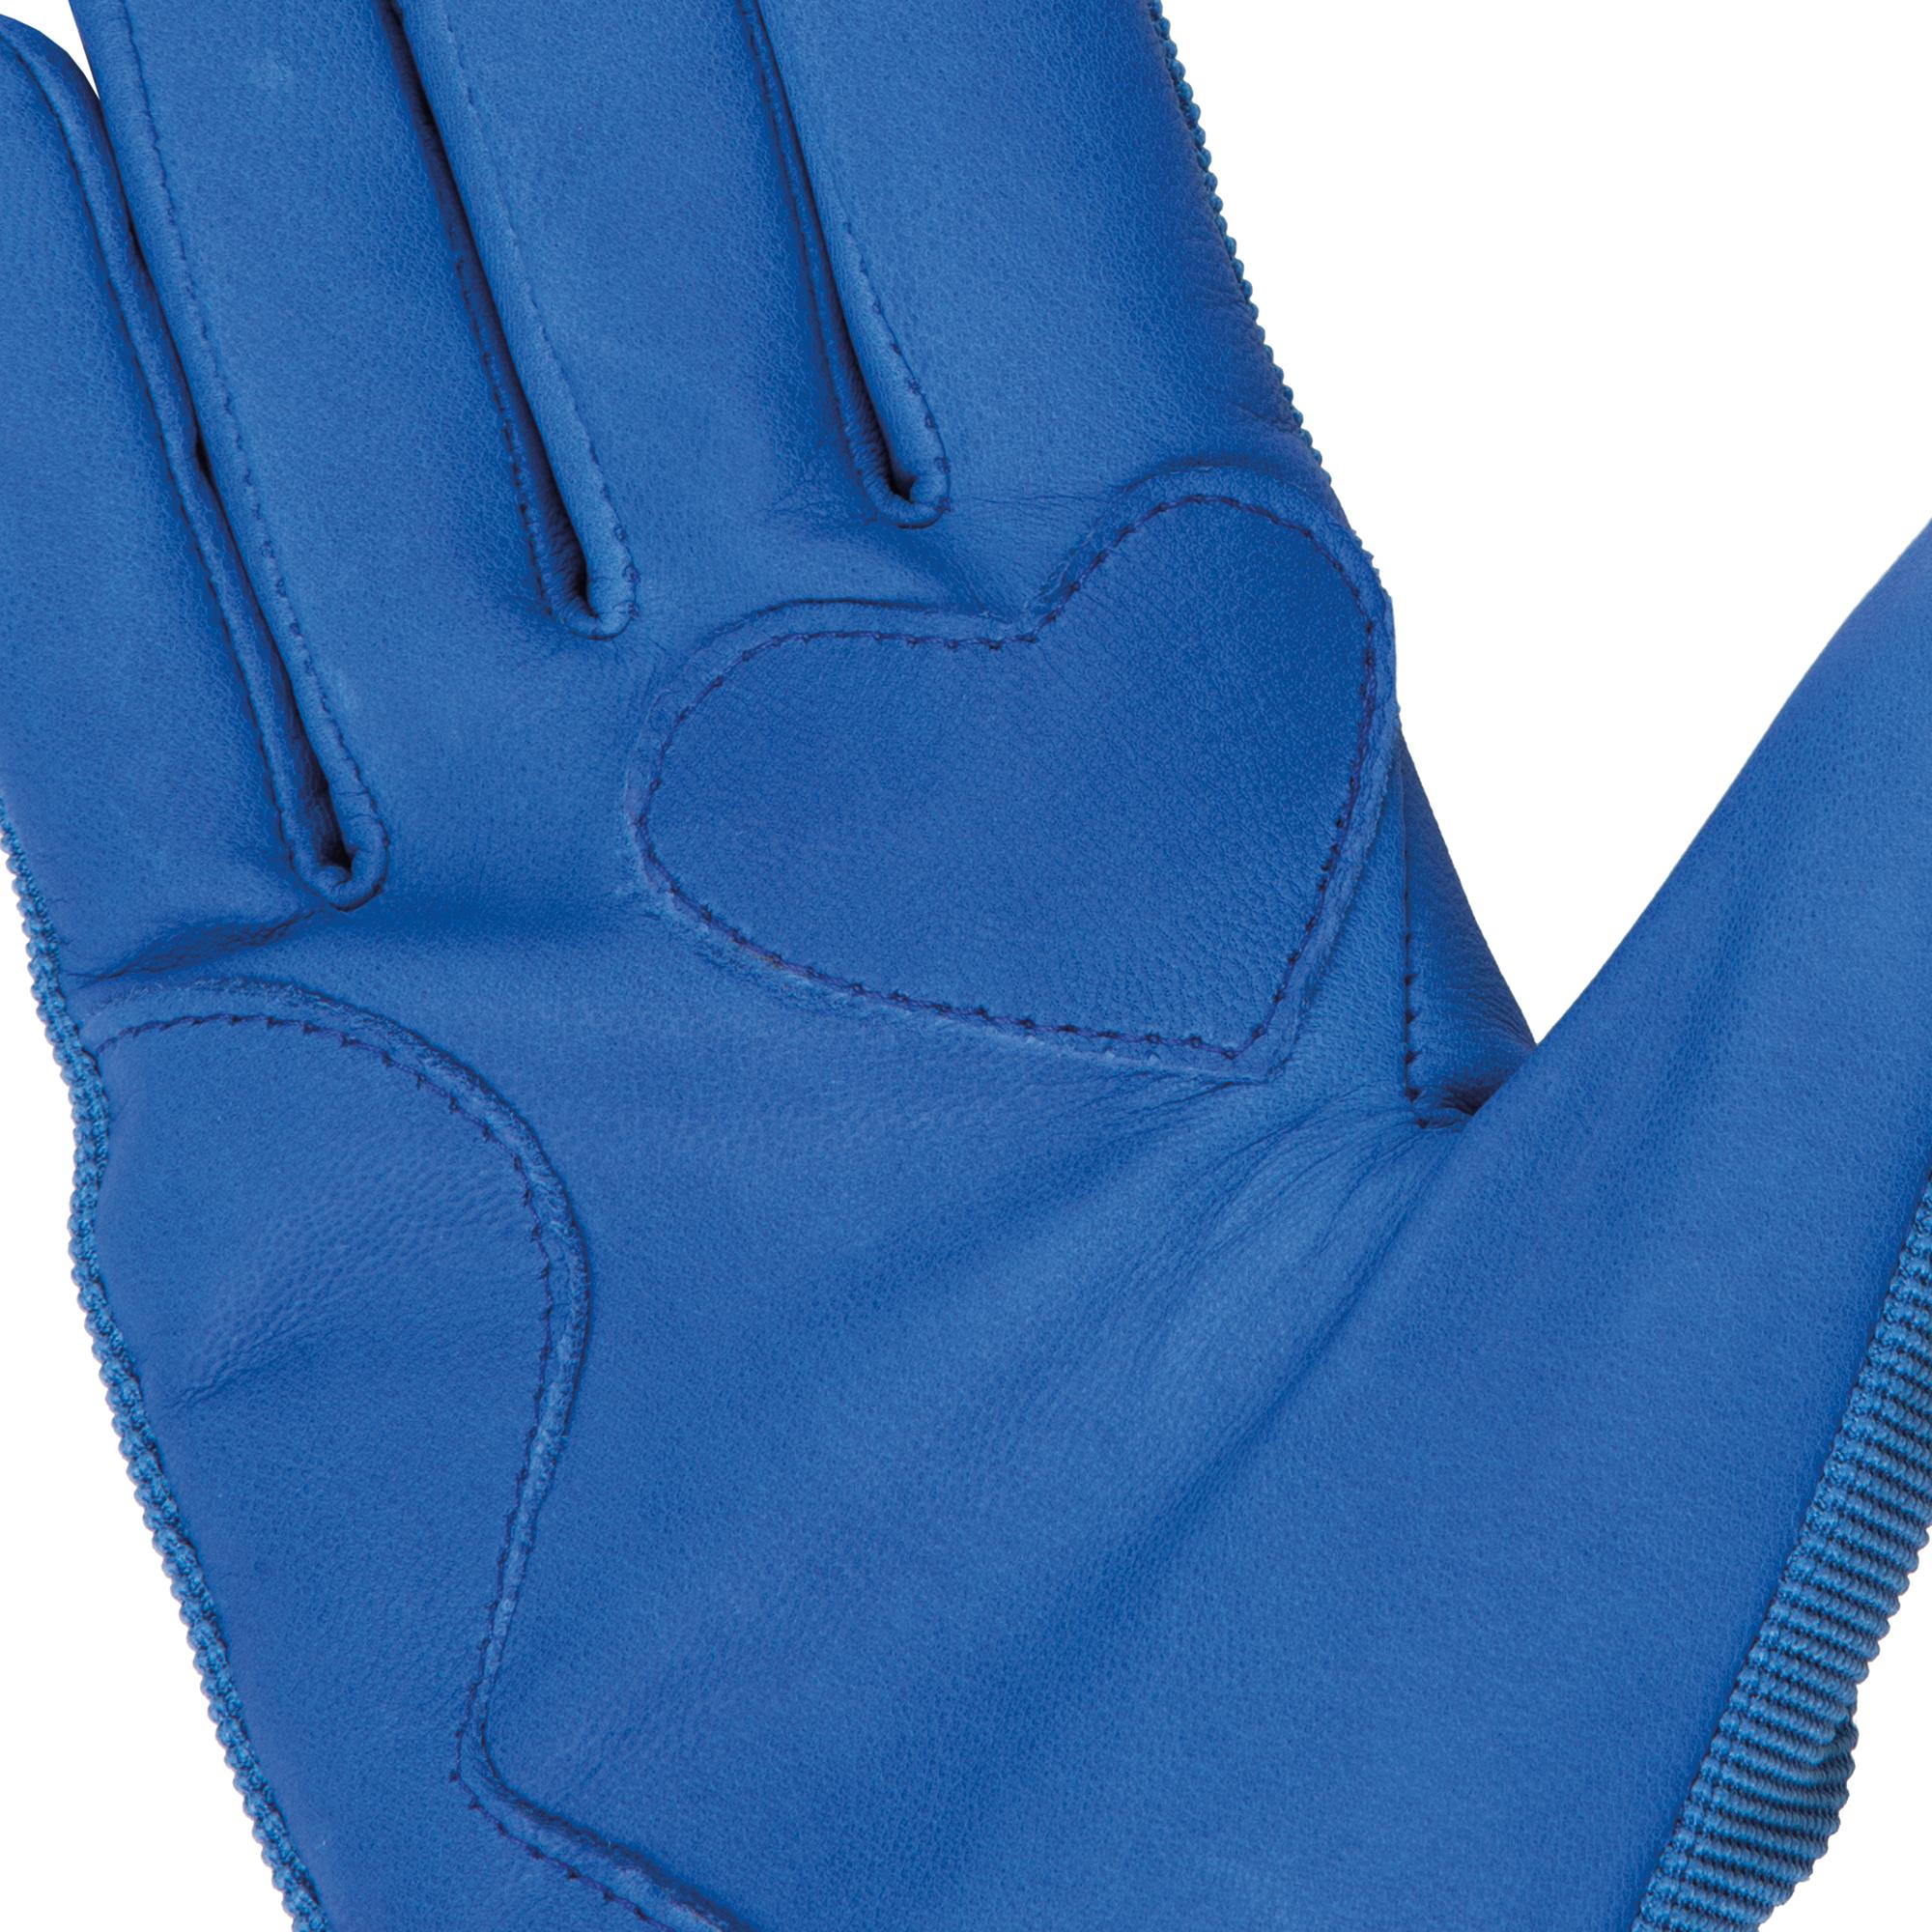 Handschuhe Eva Guant Blau Tucano Urbano